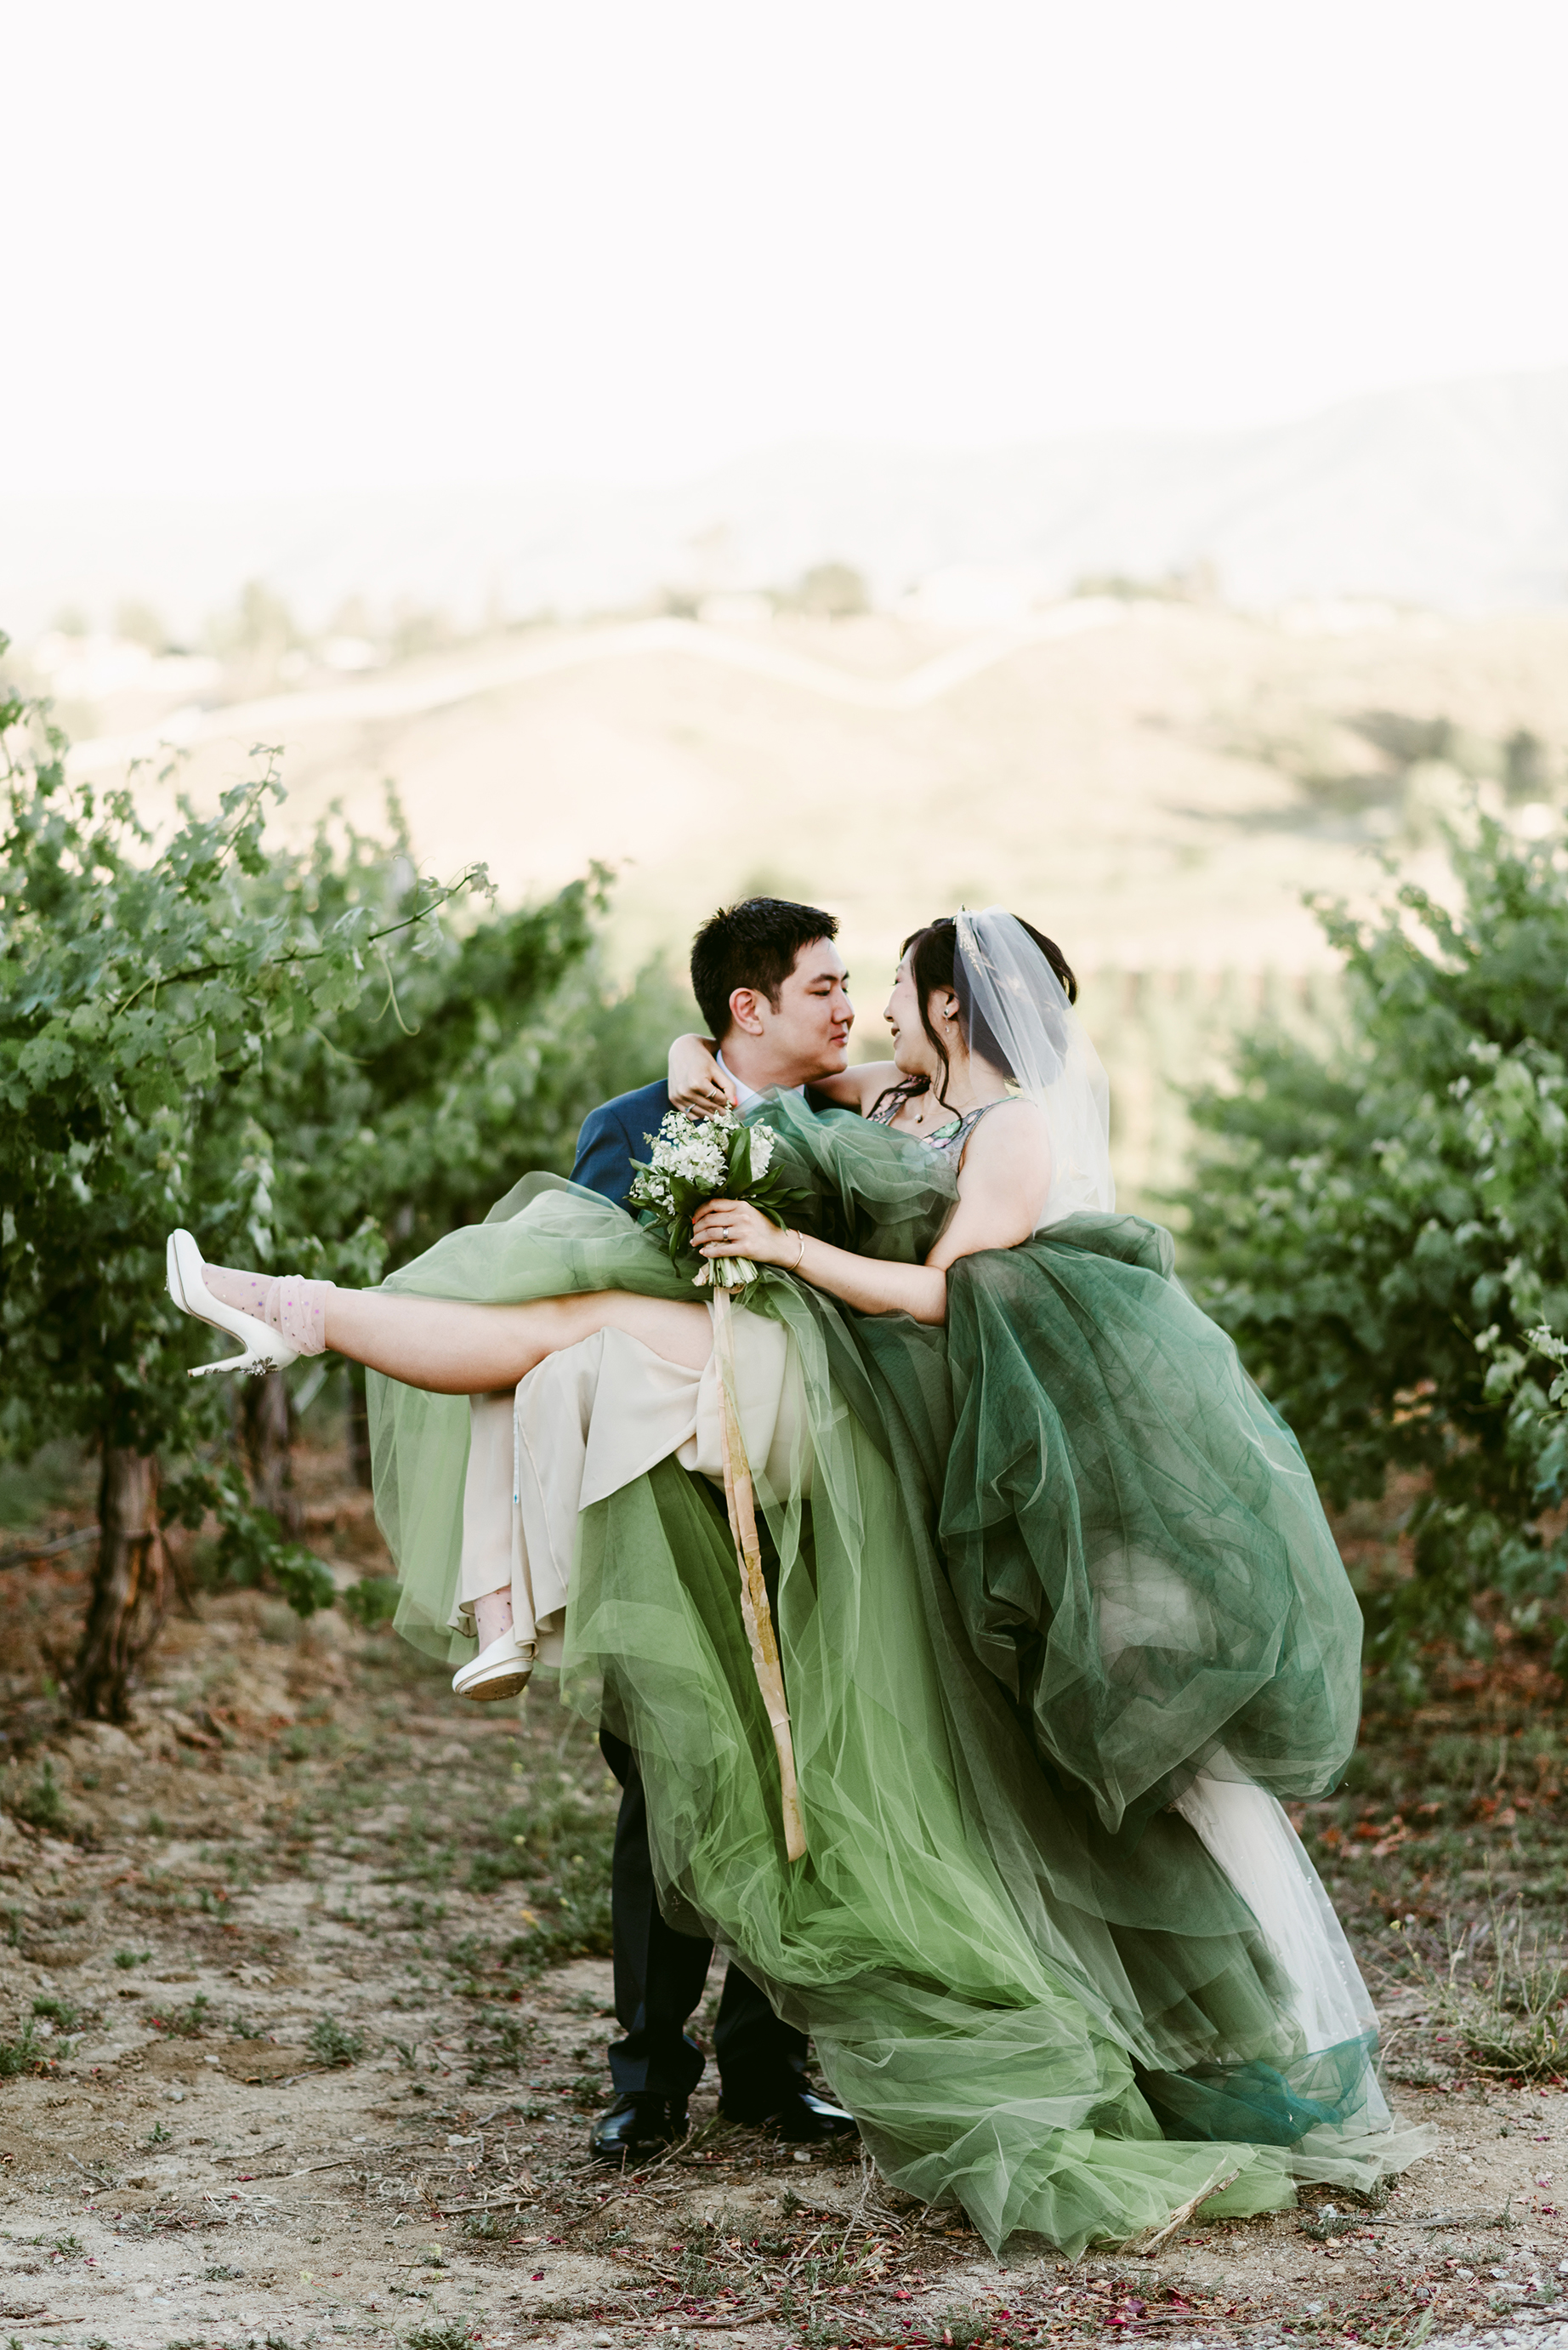 A man carries his bride as she wears a green wedding dress.